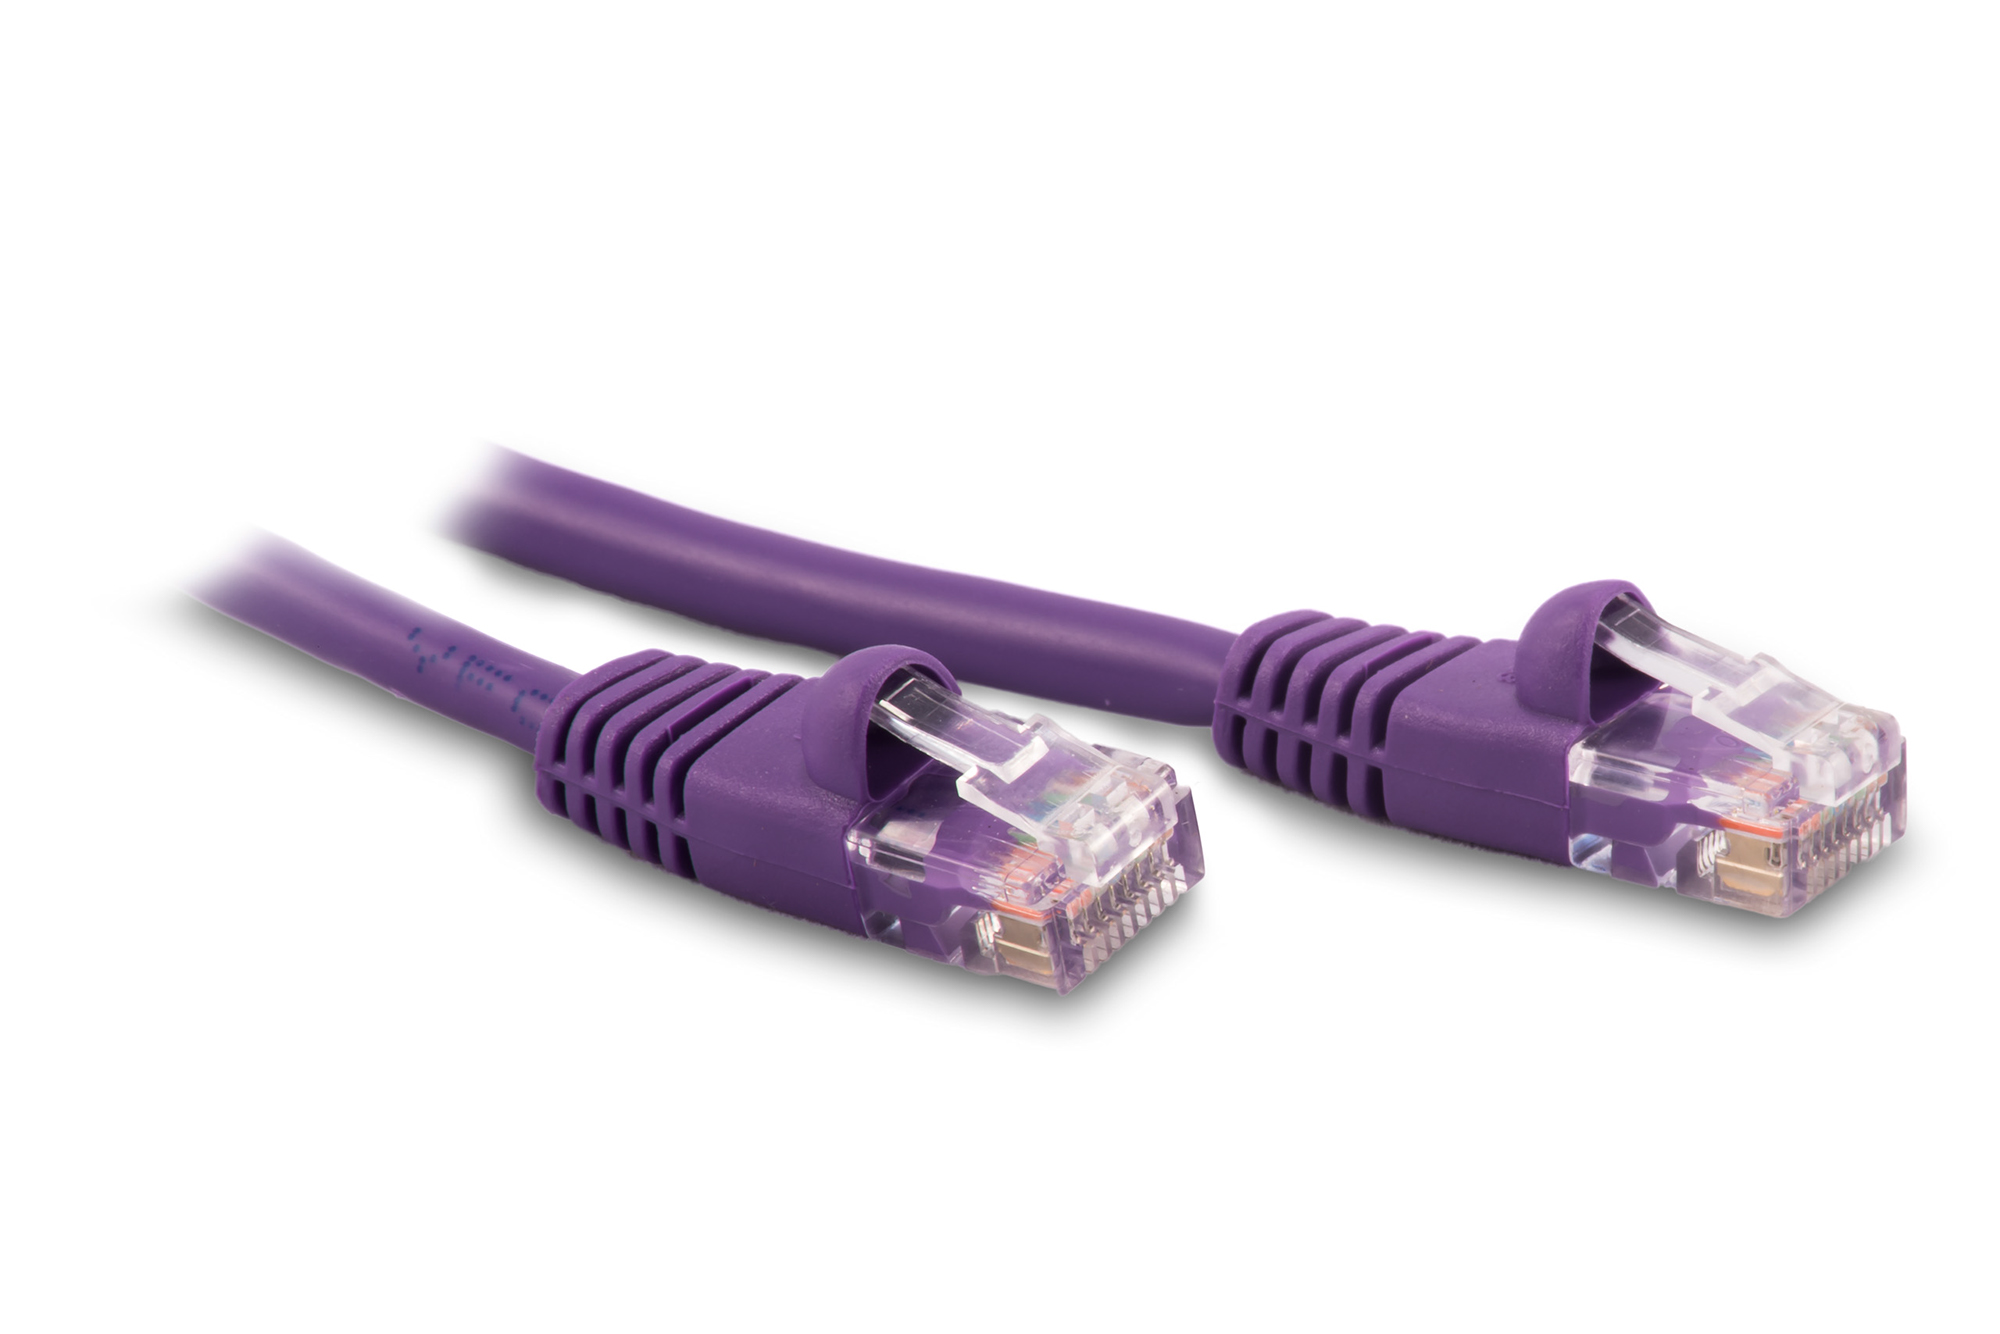 14ft Cat5e Ethernet Patch Cable - Violet Color - Snagless Boot, Stranded, RJ45, 350Mhz, 24AWG